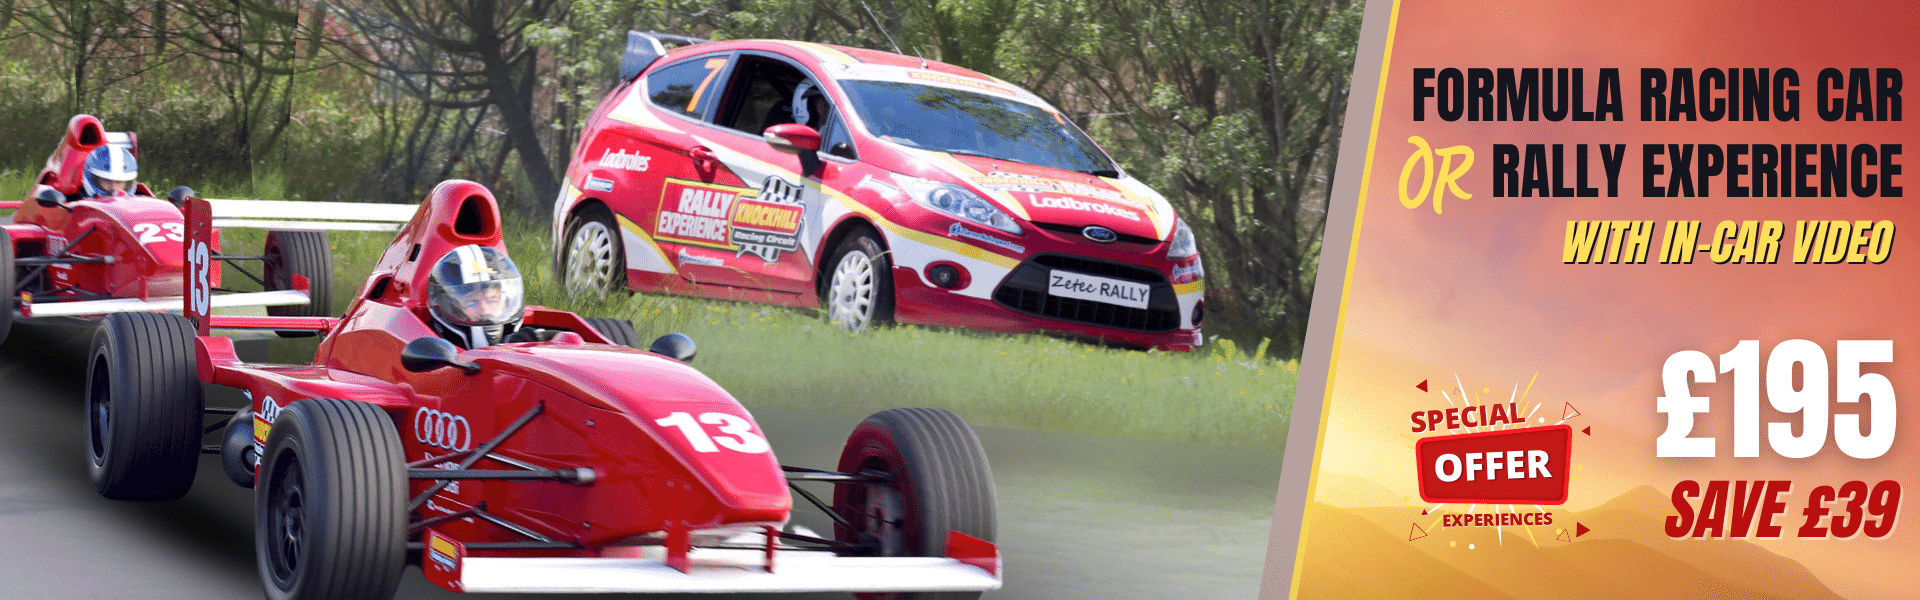 Formula Racing Car or Rally Experience